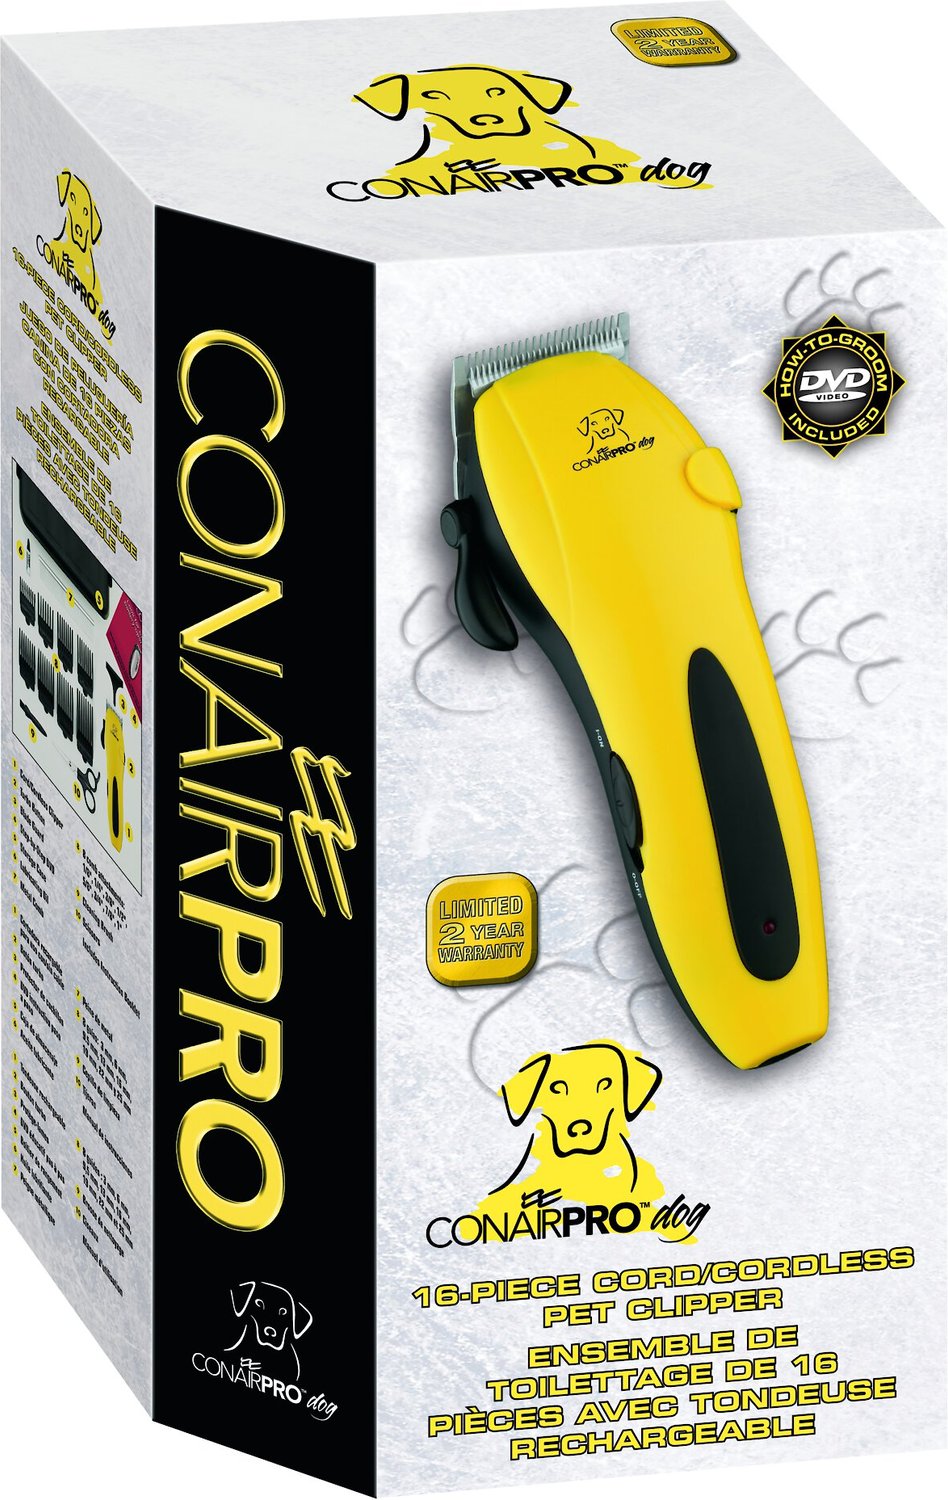 conair dog trimmer